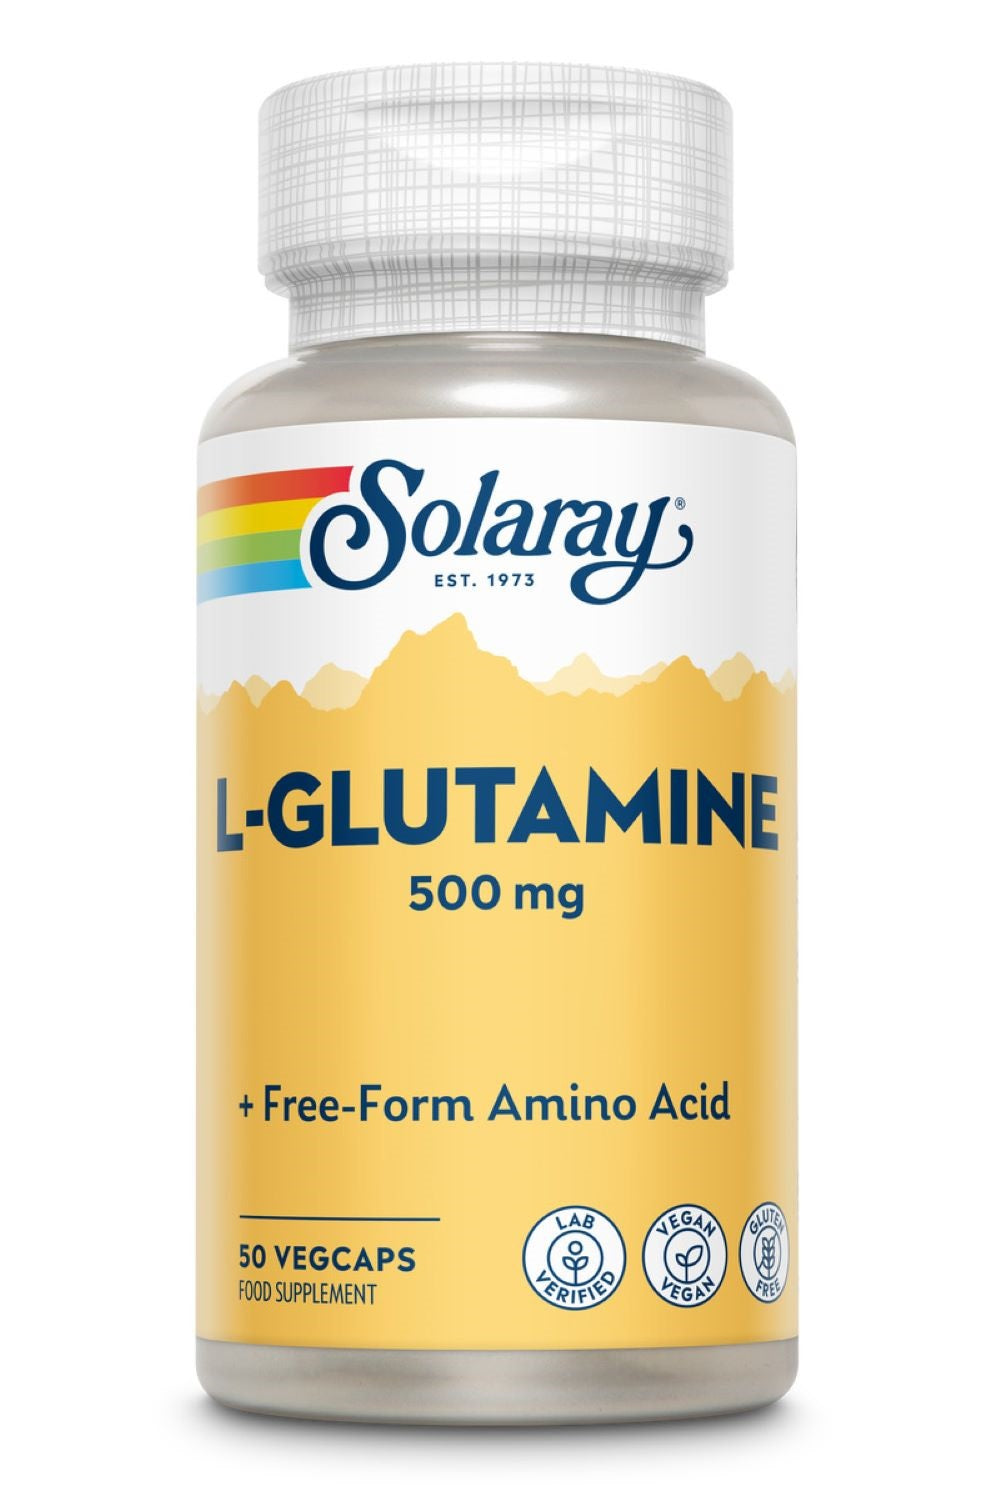 Solaray L-Glutamine Free Form -500mg, 50 Capsules